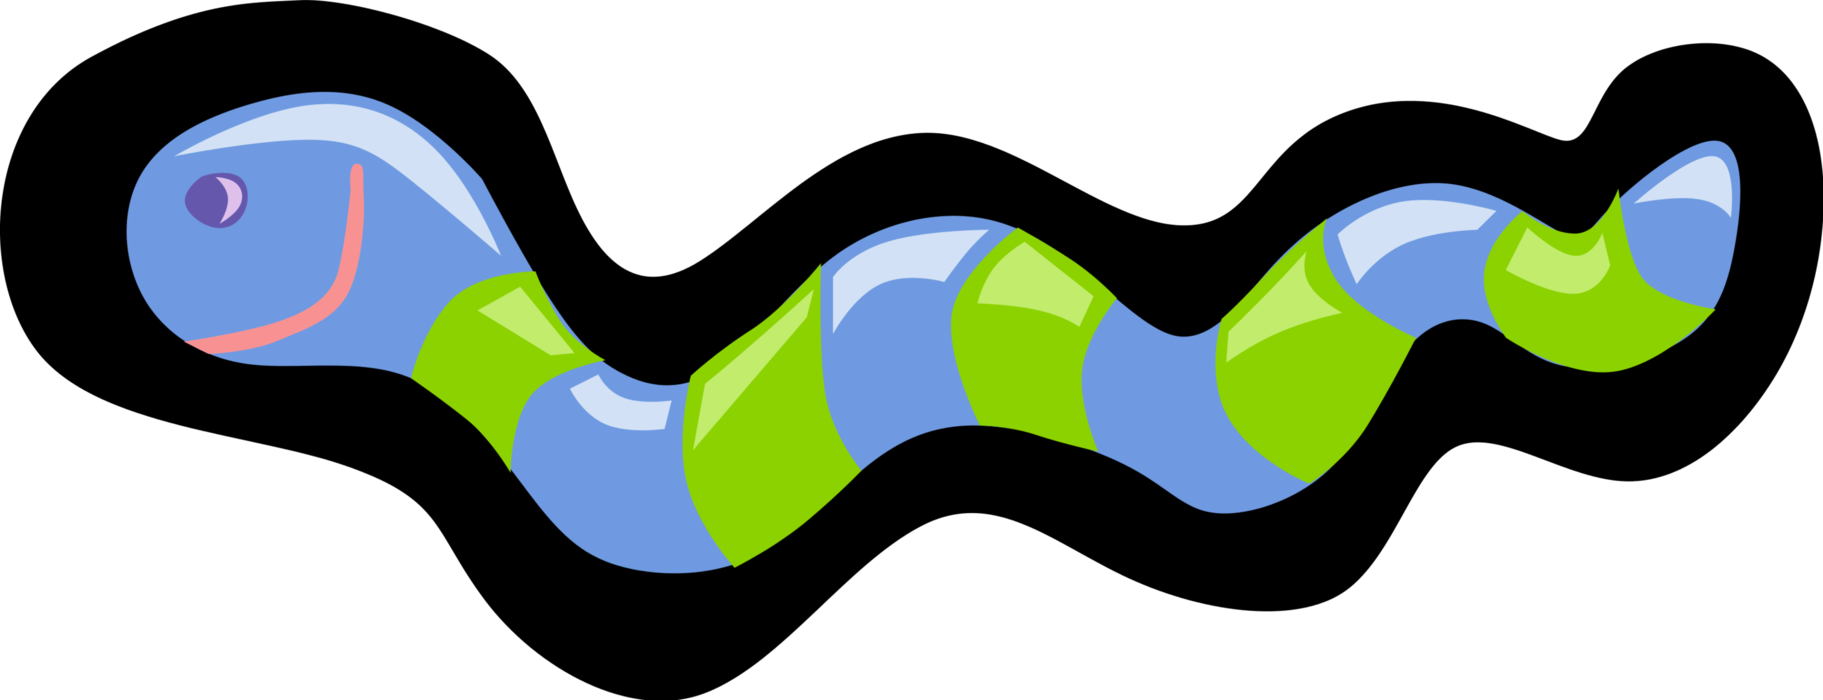 Vector Illustration of Worm Non-Arthropod Invertebrate Animal